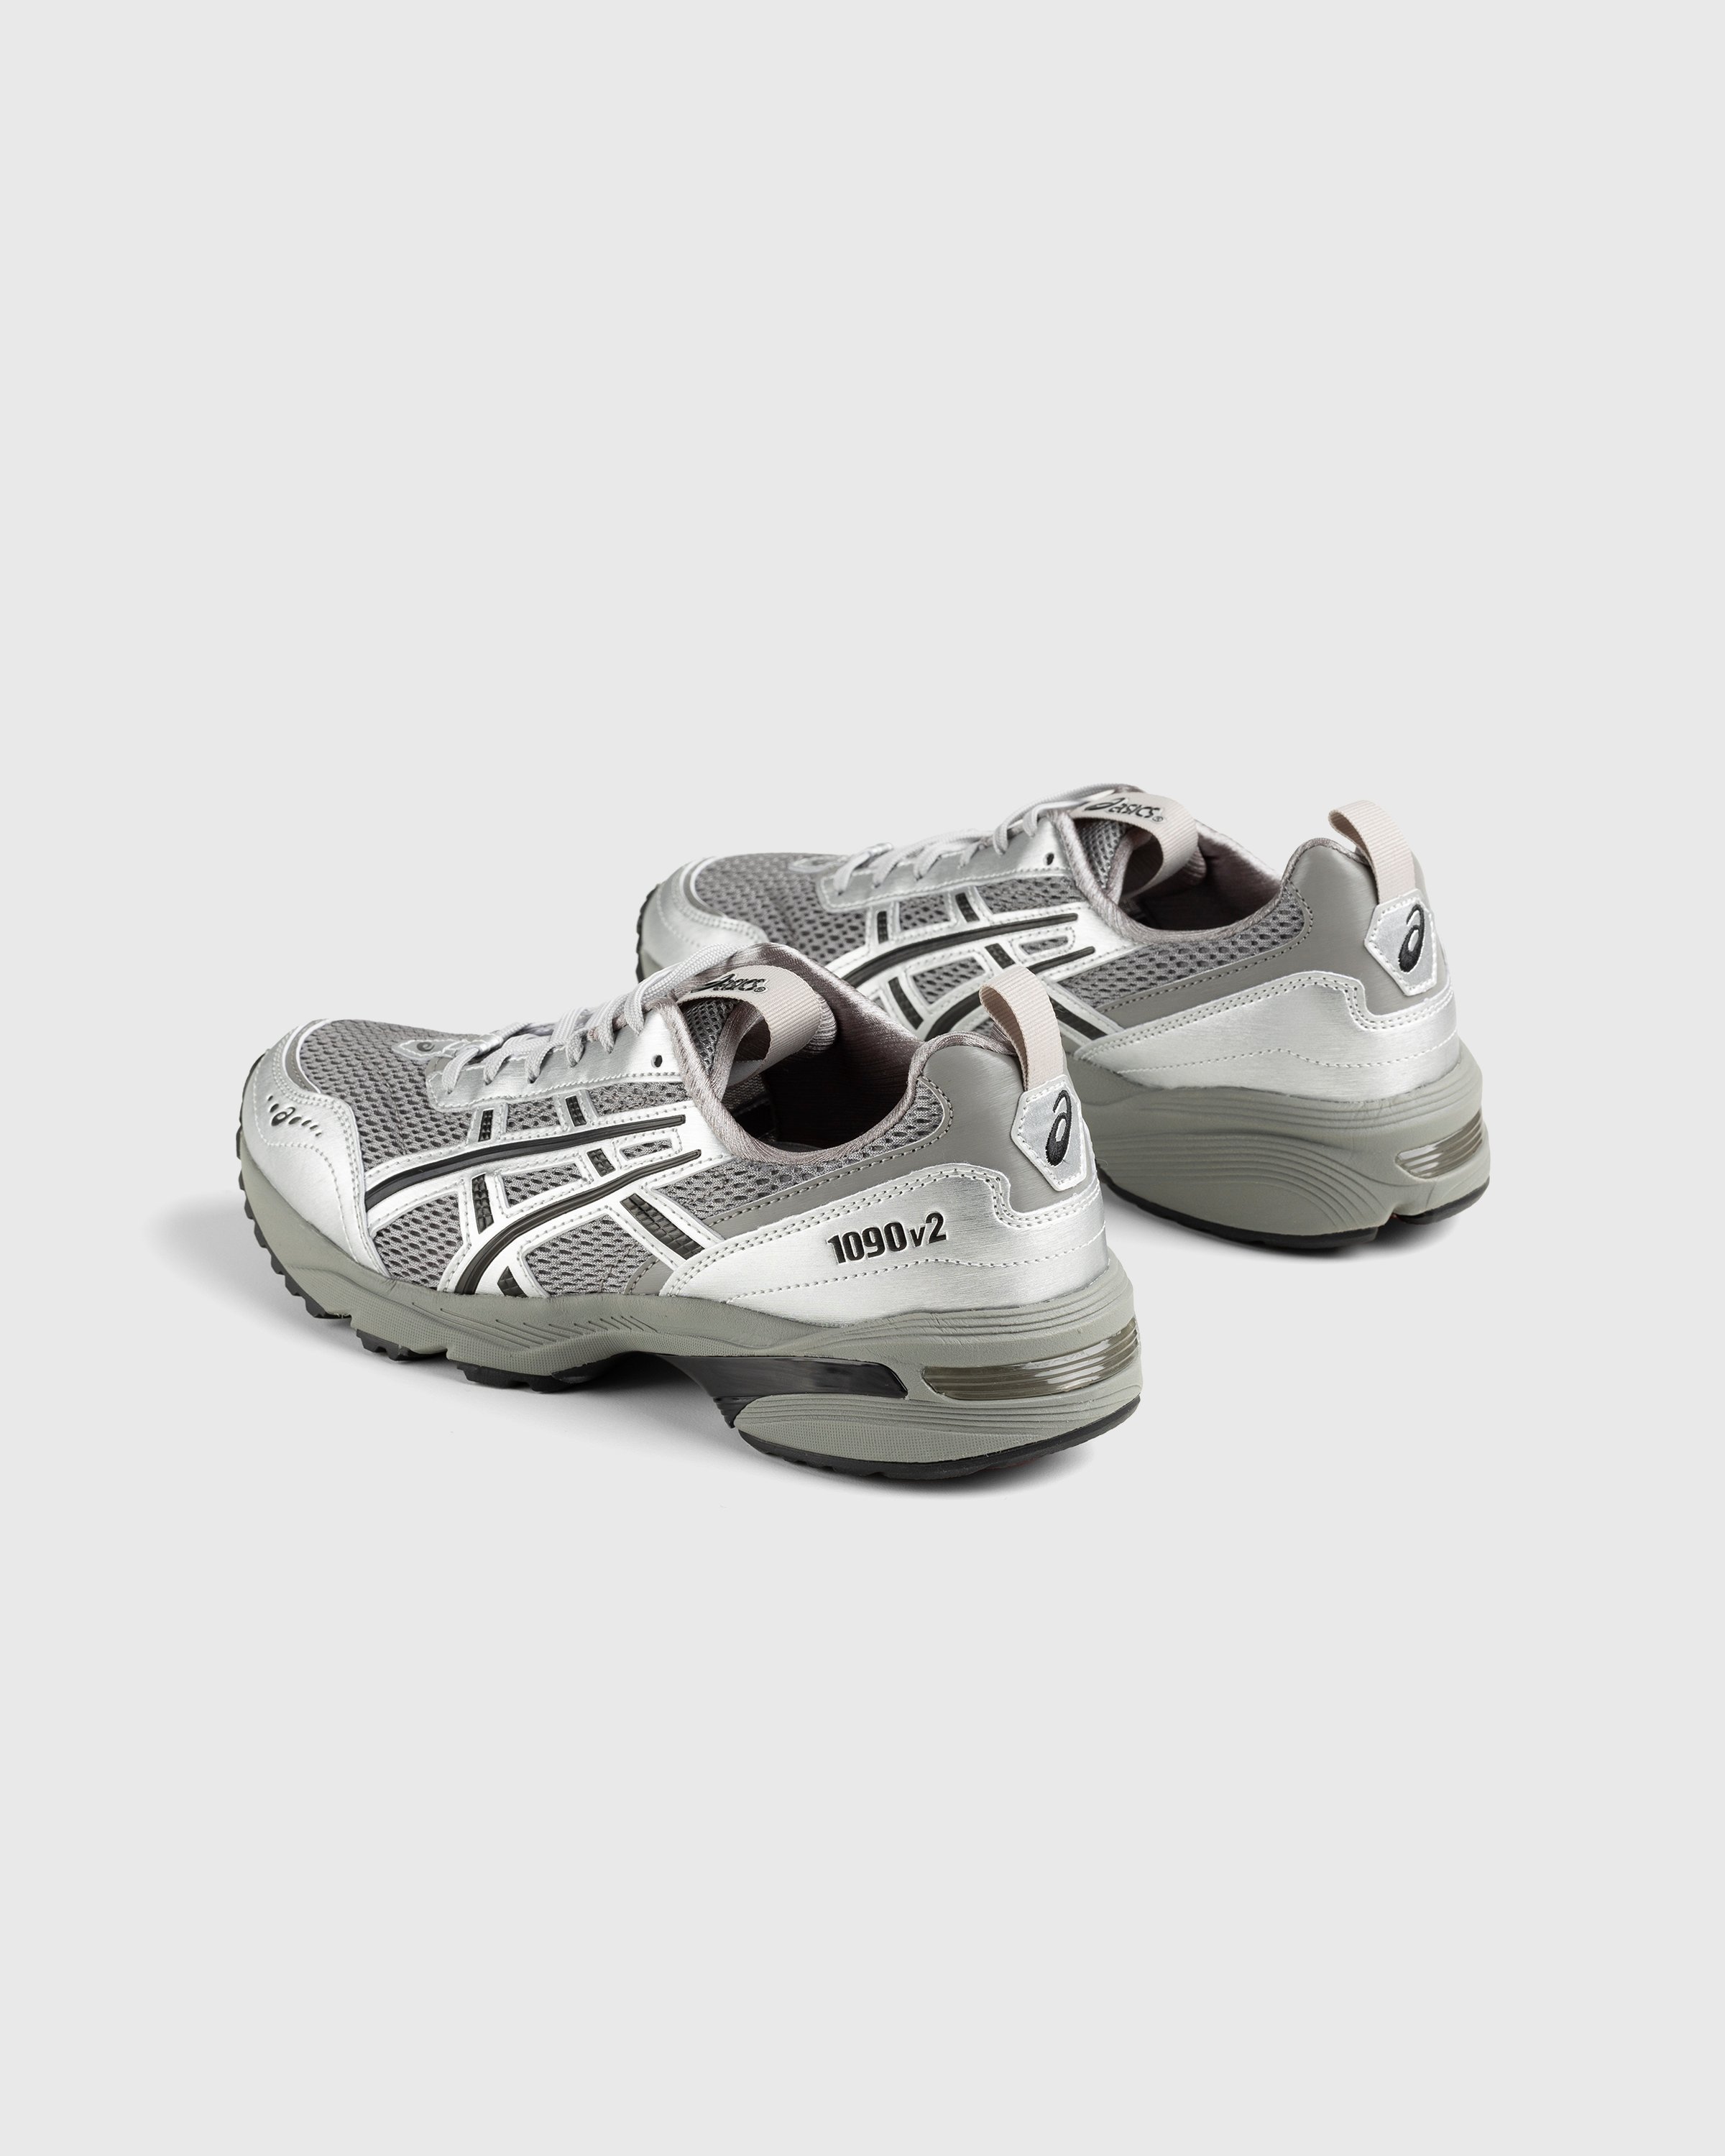 asics - GEL-1090v2 Freja Wewer Edition Silver - Footwear - Silver - Image 4